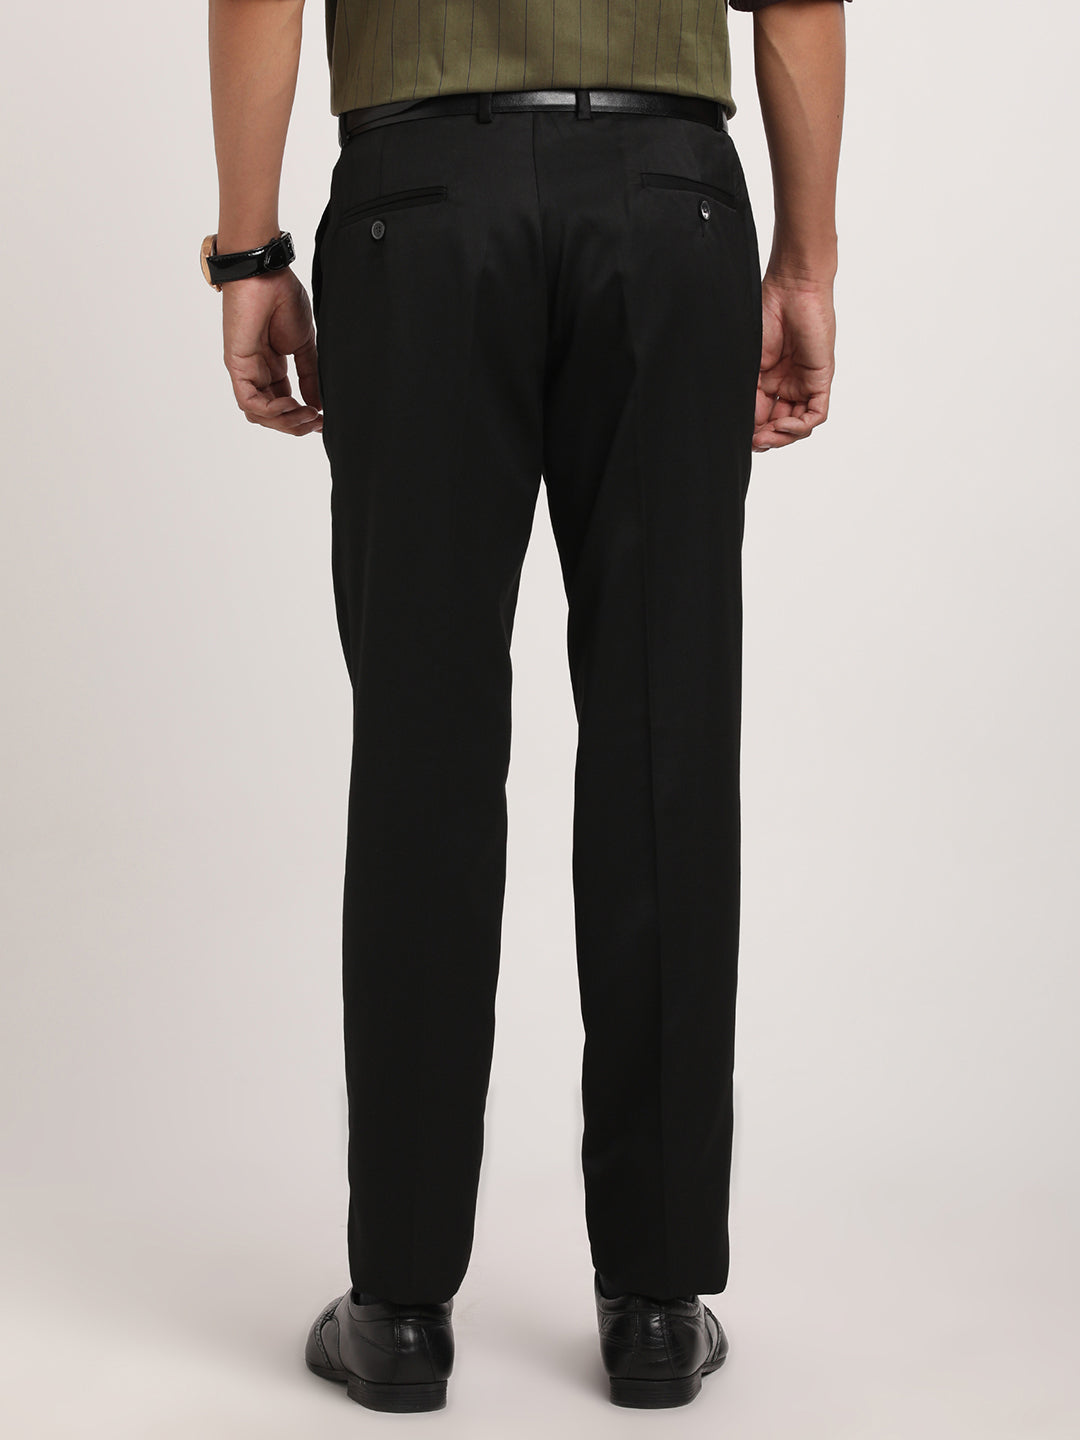 Men's Stretch Trousers Slim Fit Classic Casual Clothes Formal suit long  Pants | eBay